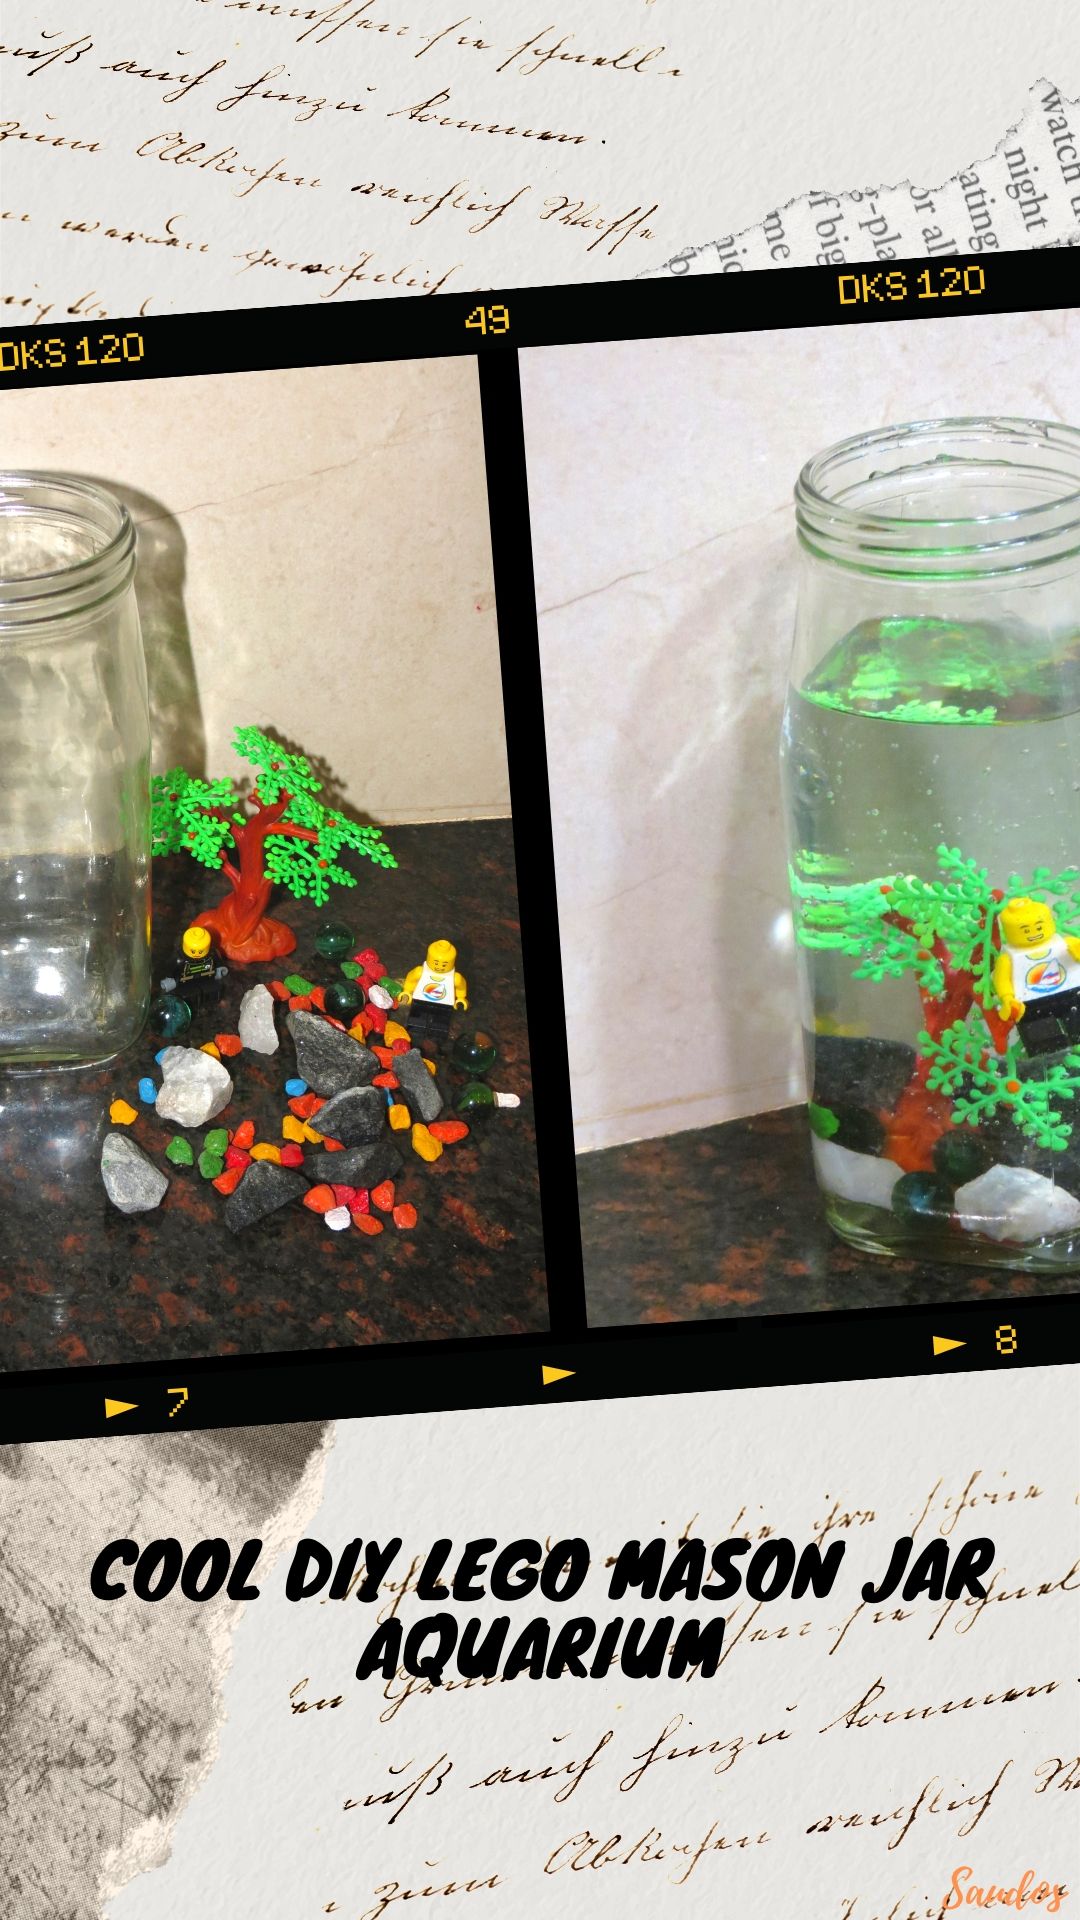 Cool DIY LEGO Mason Jar Aquarium